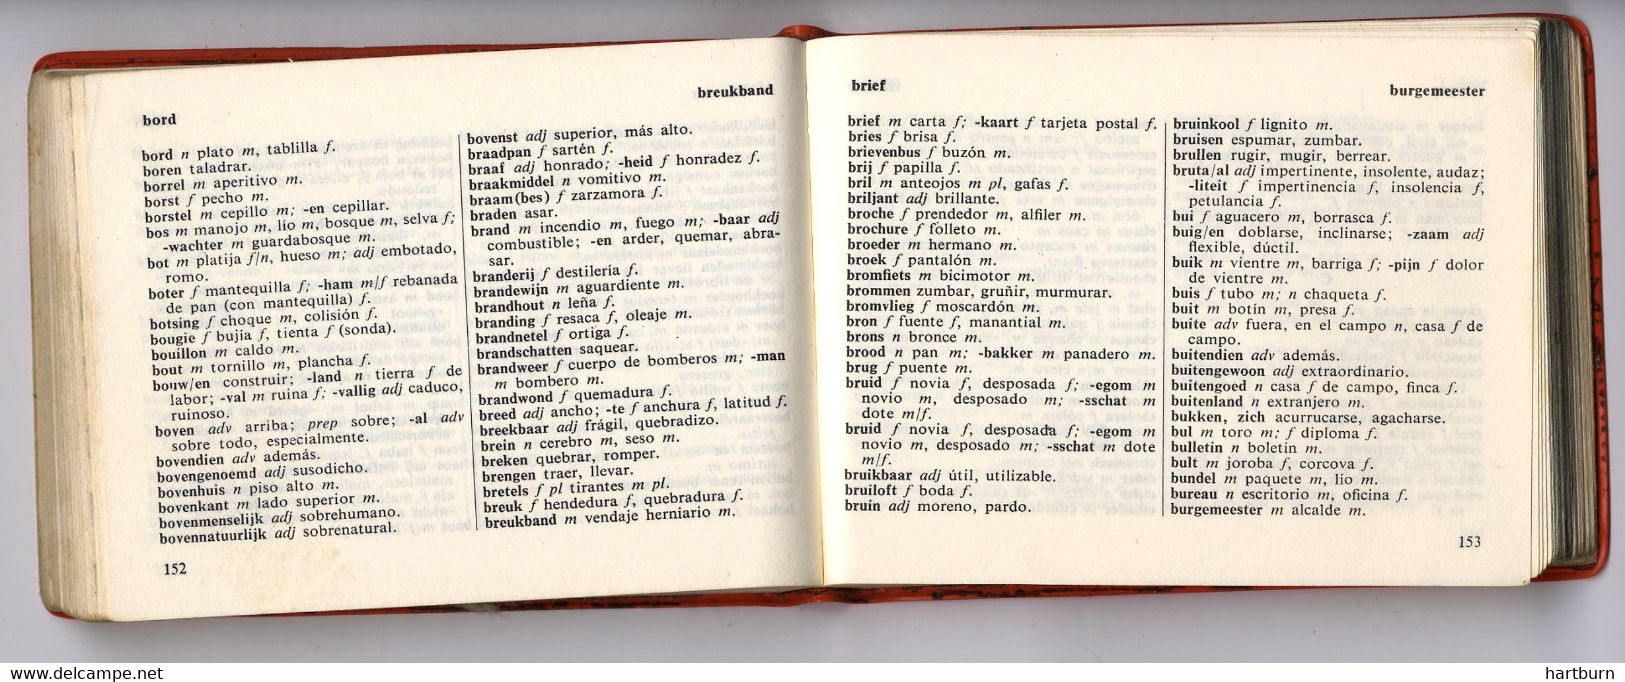 ♥️ Diccionario Universal. Holandes. Espanol, Holandes - Nederlands, Spaans. Herder. (BAK-5,2) Pocketformaat-Woordenboek - Dictionaries